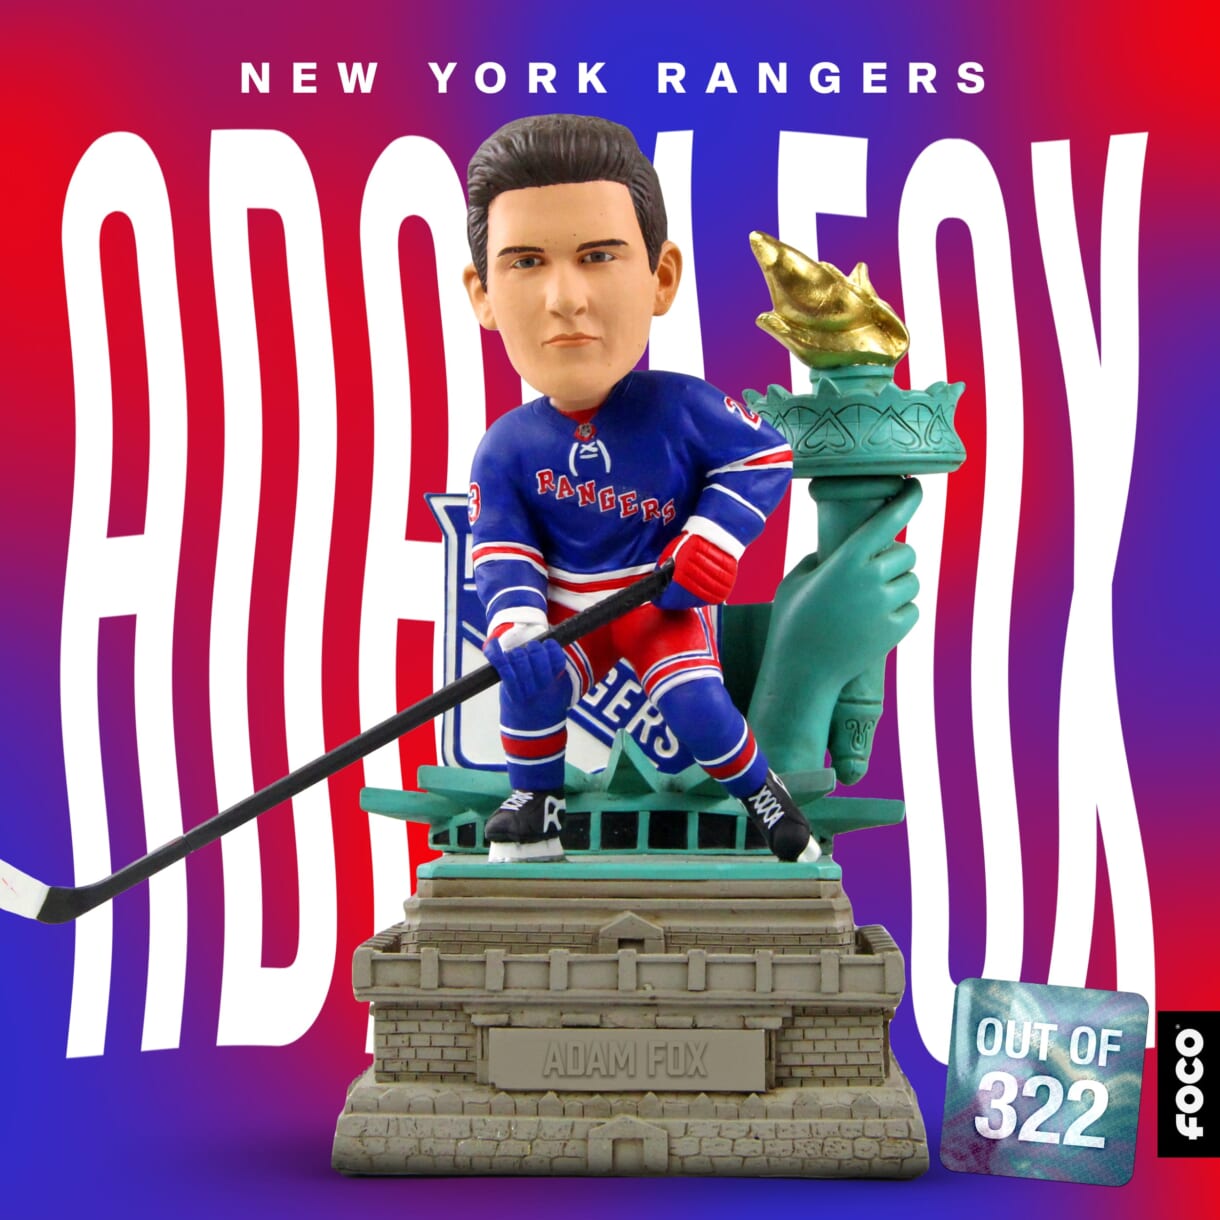 New York Rangers Adam Fox was Snubbed of a Calder Trophy